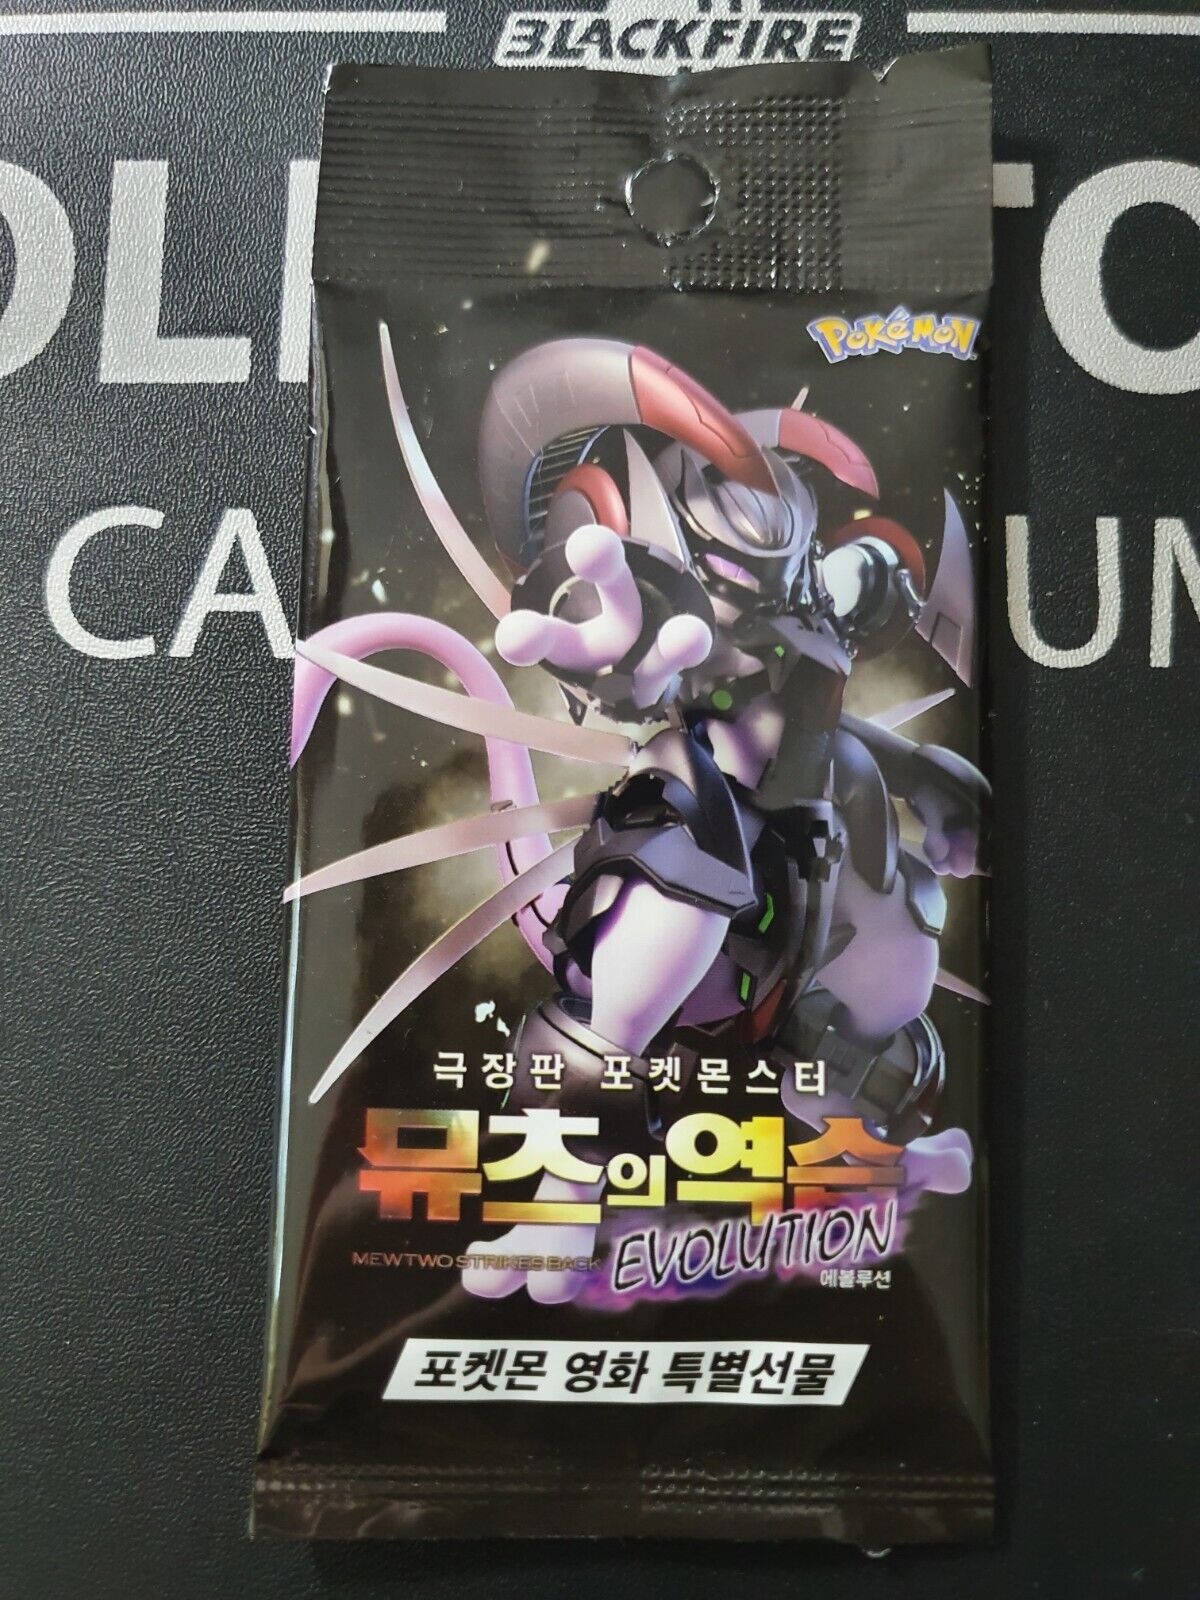 Pokemon Armored Mewtwo/Mewtu Booster Pack Promo Card 196/SM-P Korean - NEW & ORIGINAL PACKAGING